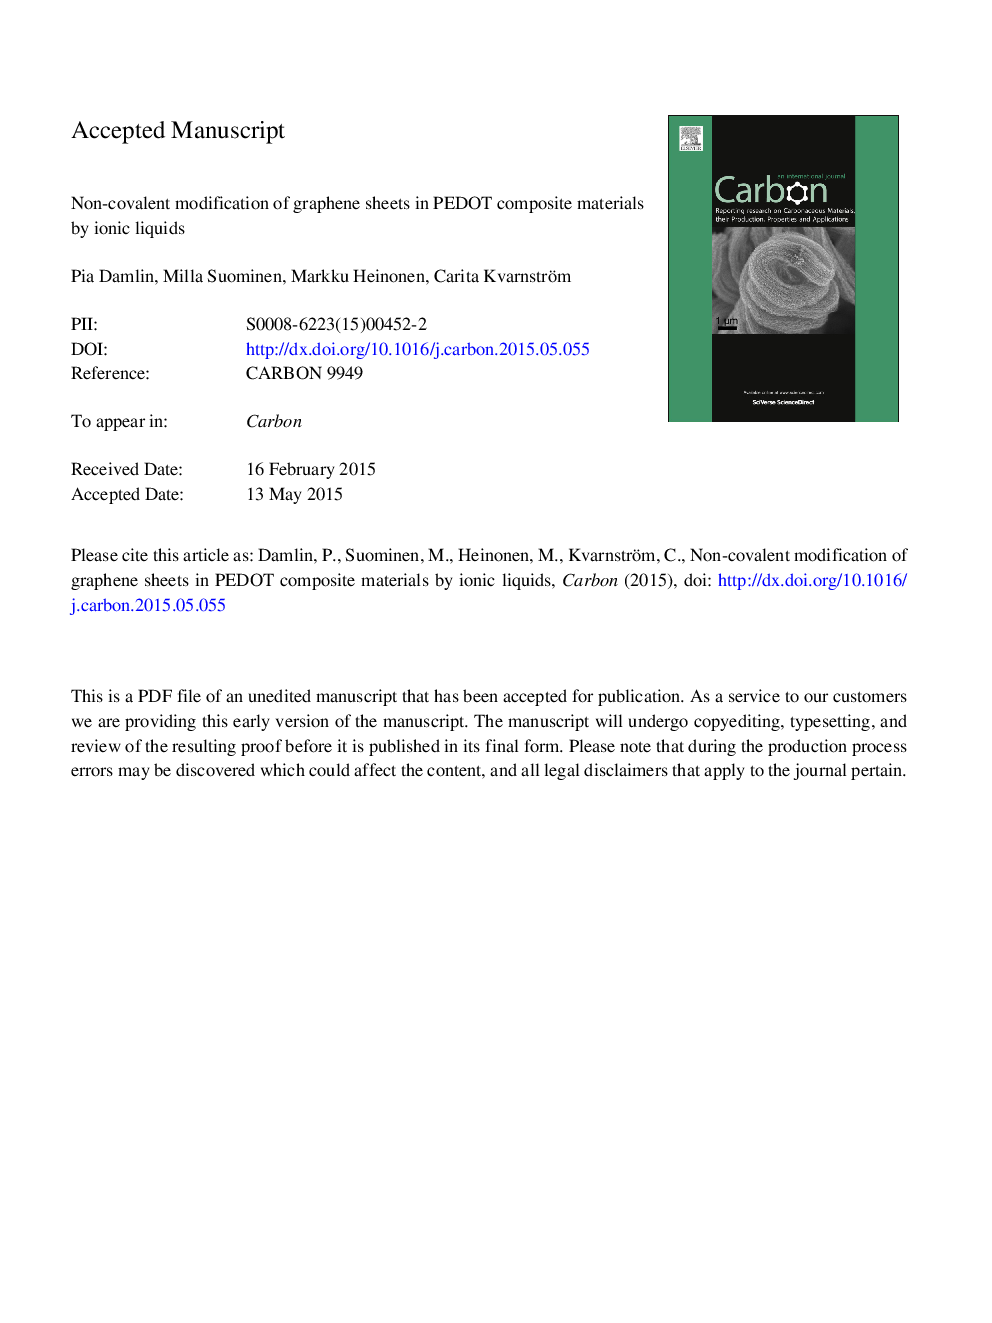 Non-covalent modification of graphene sheets in PEDOT composite materials by ionic liquids